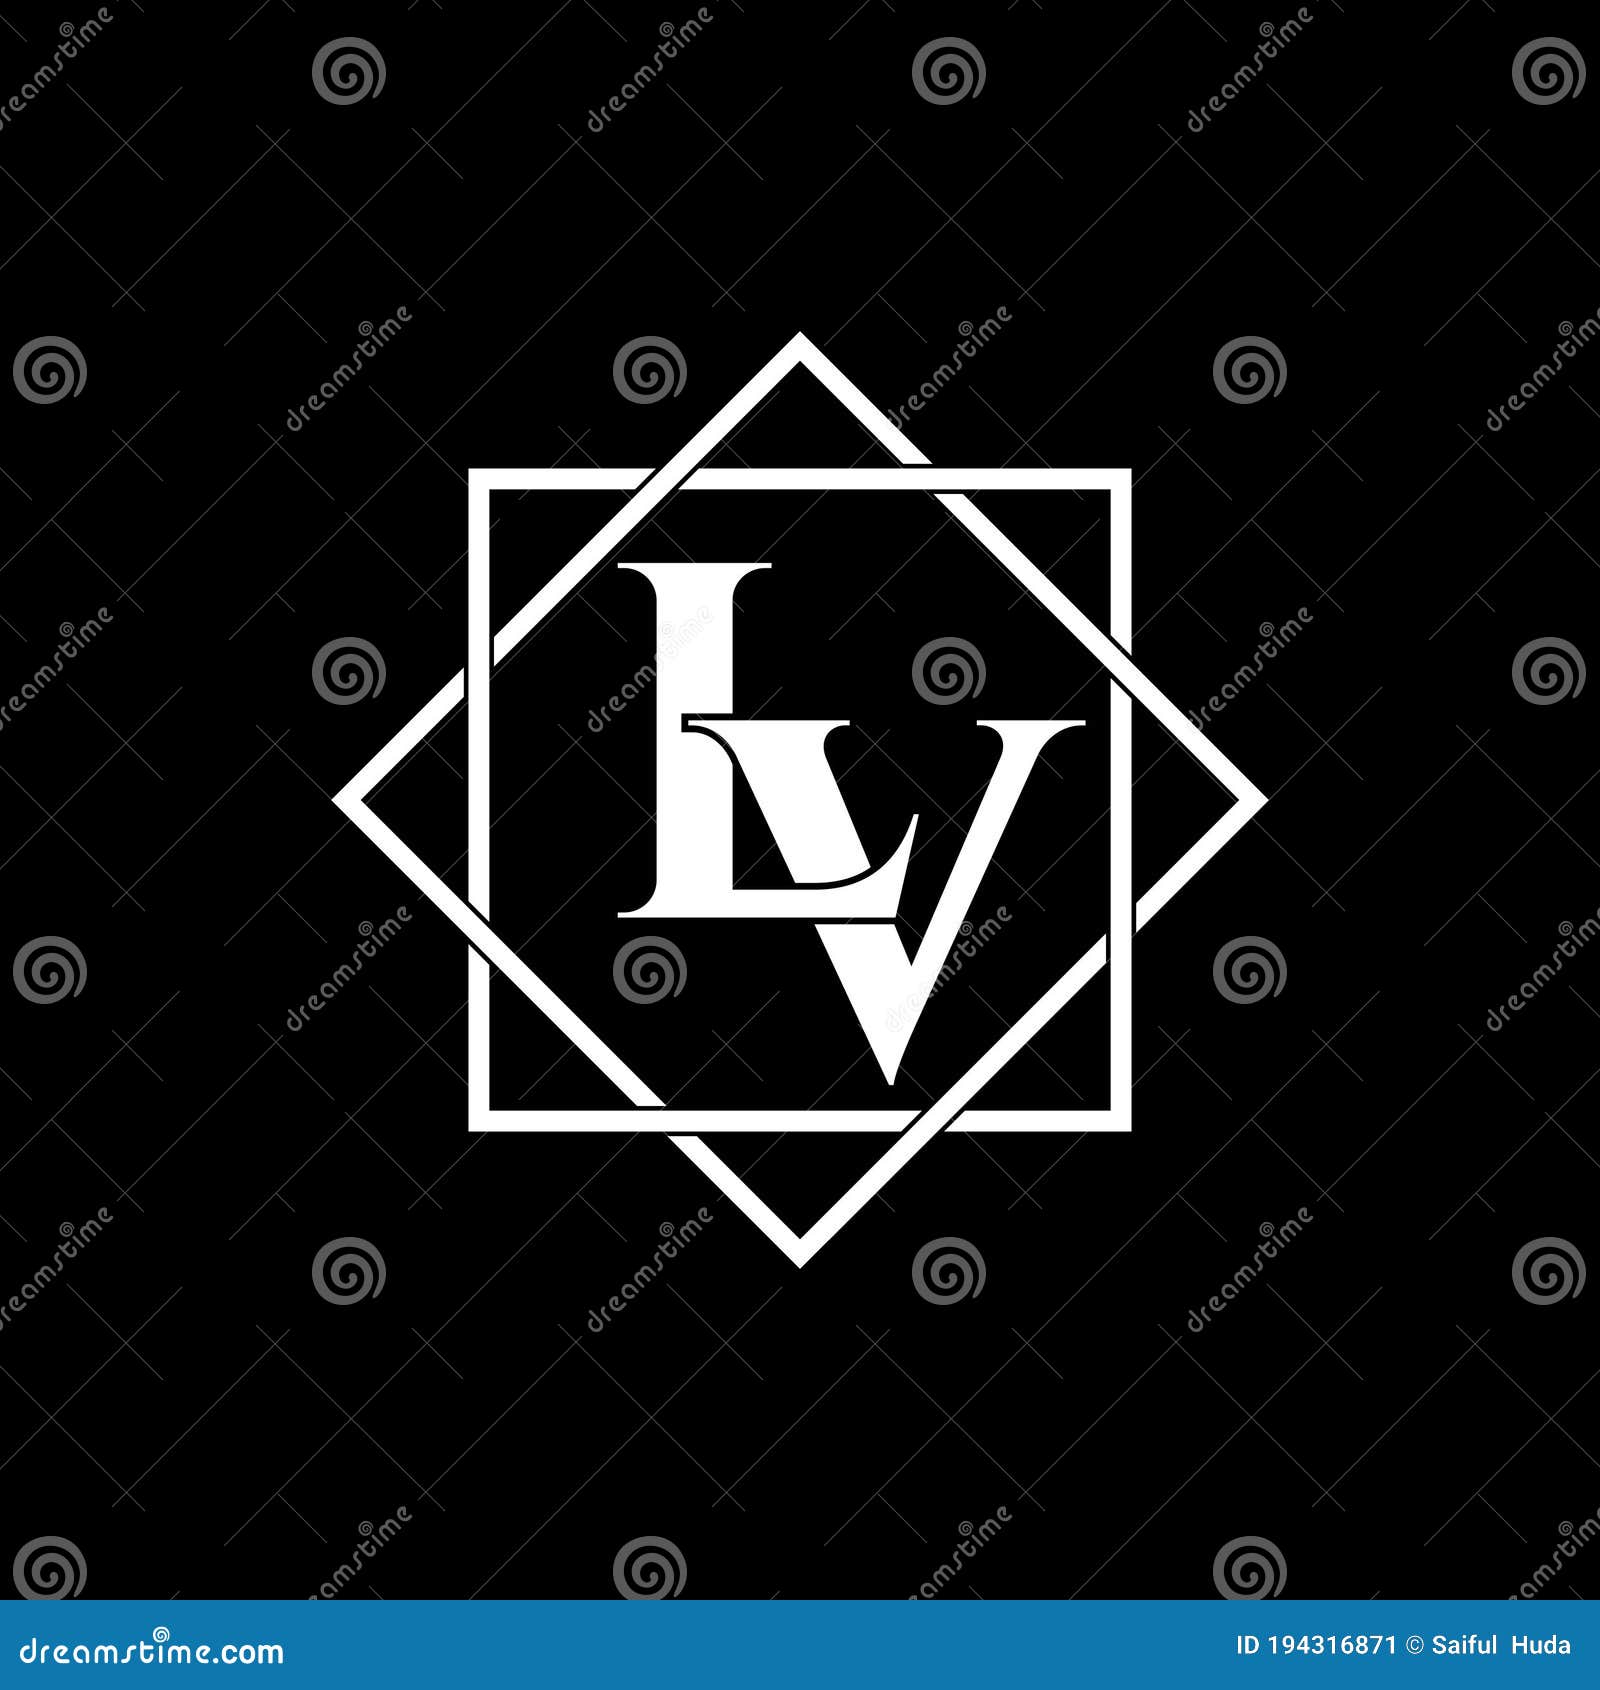 Premium Vector  Letter v or lv monogram logo with business card design